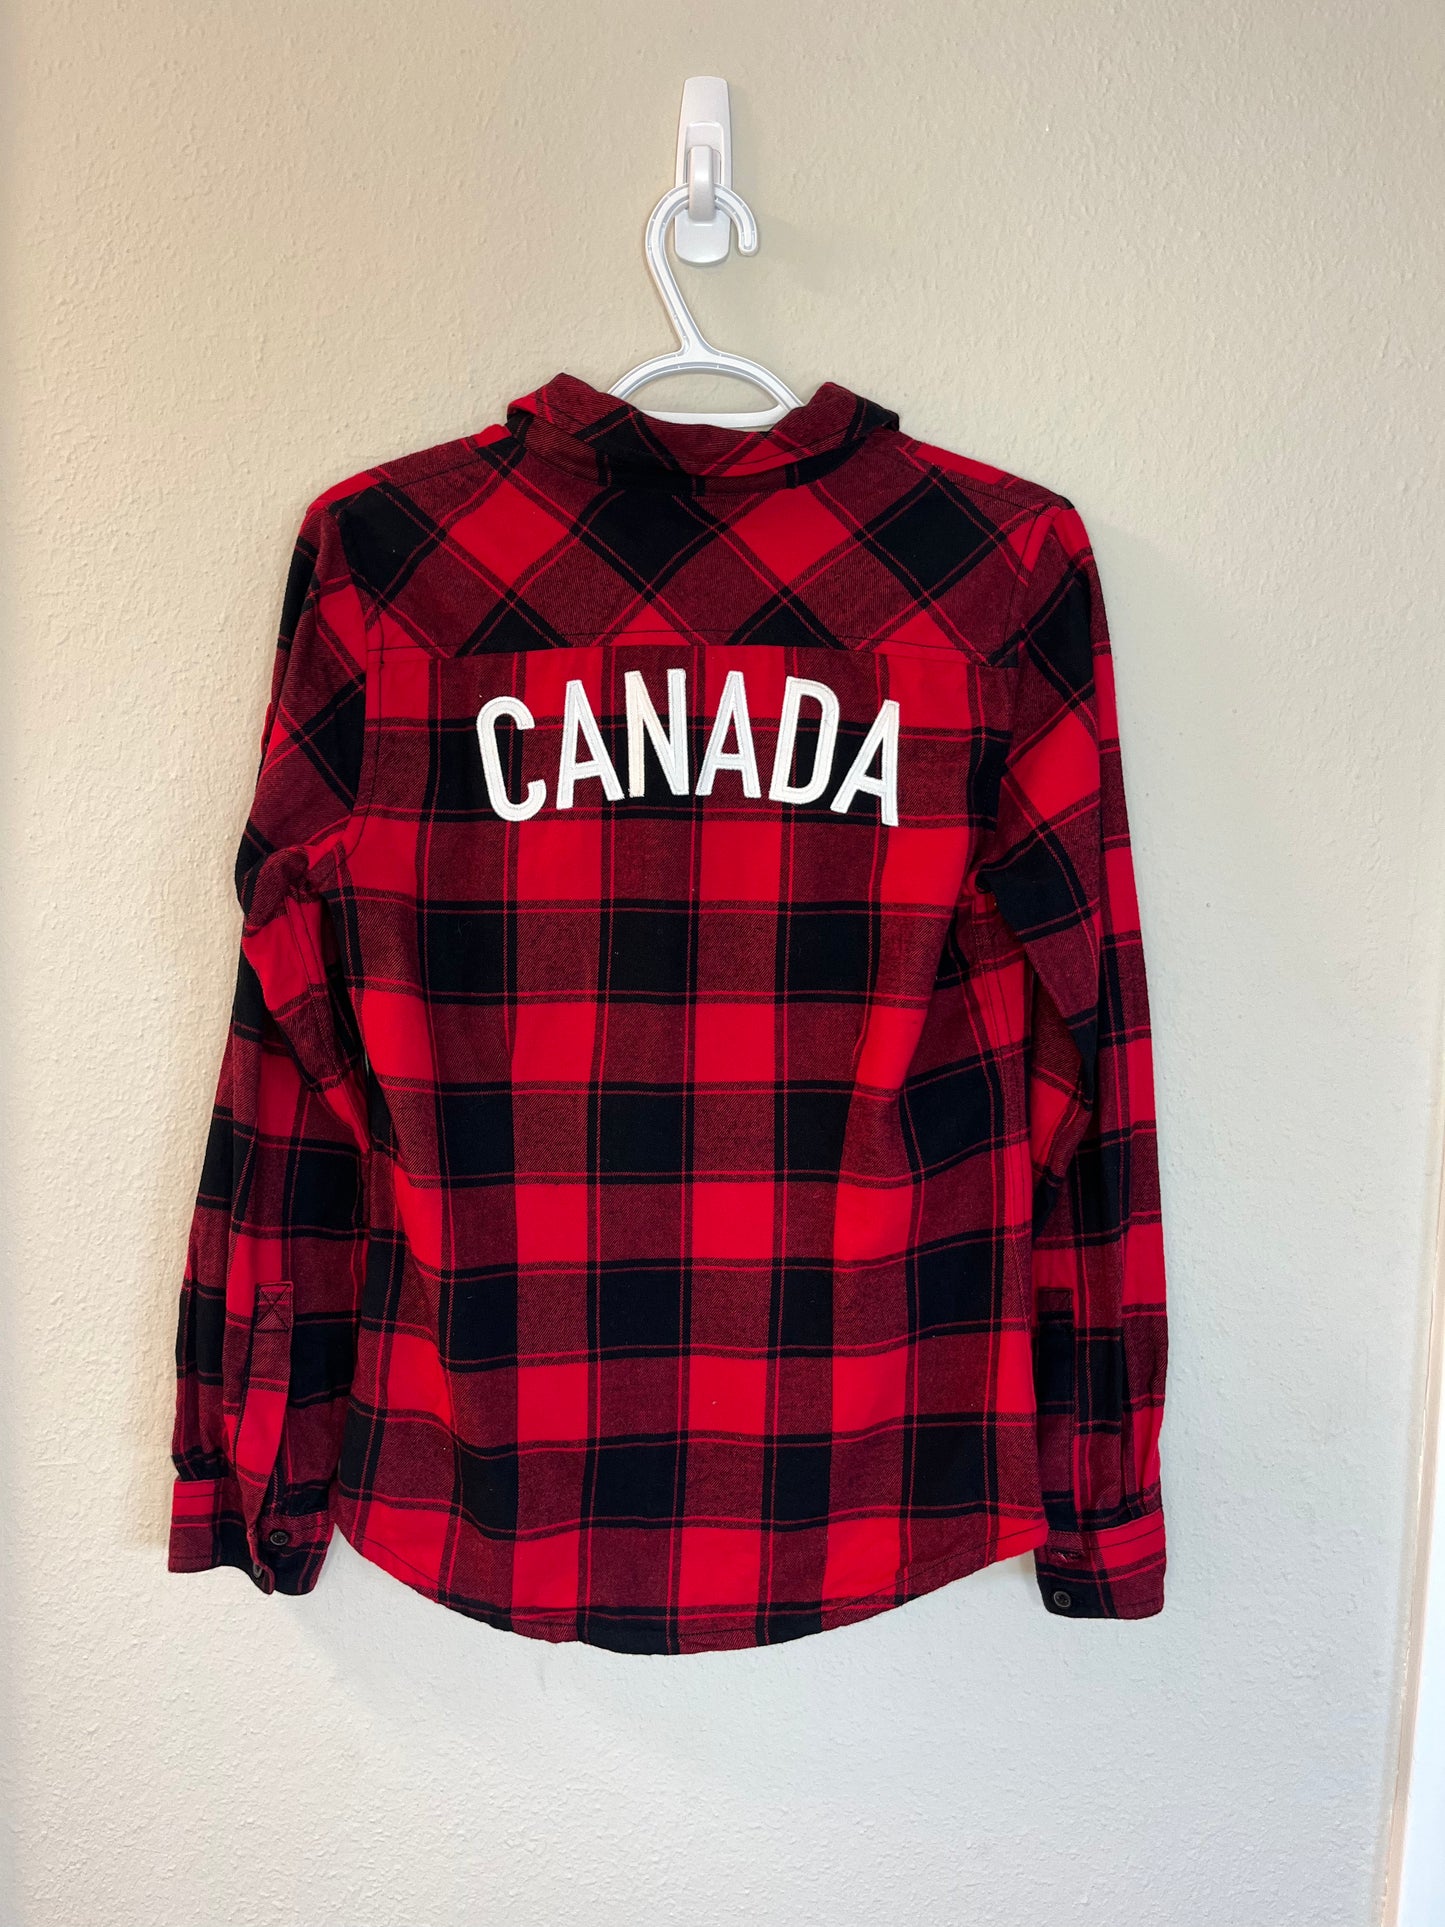 Canadian Olympics Shirt